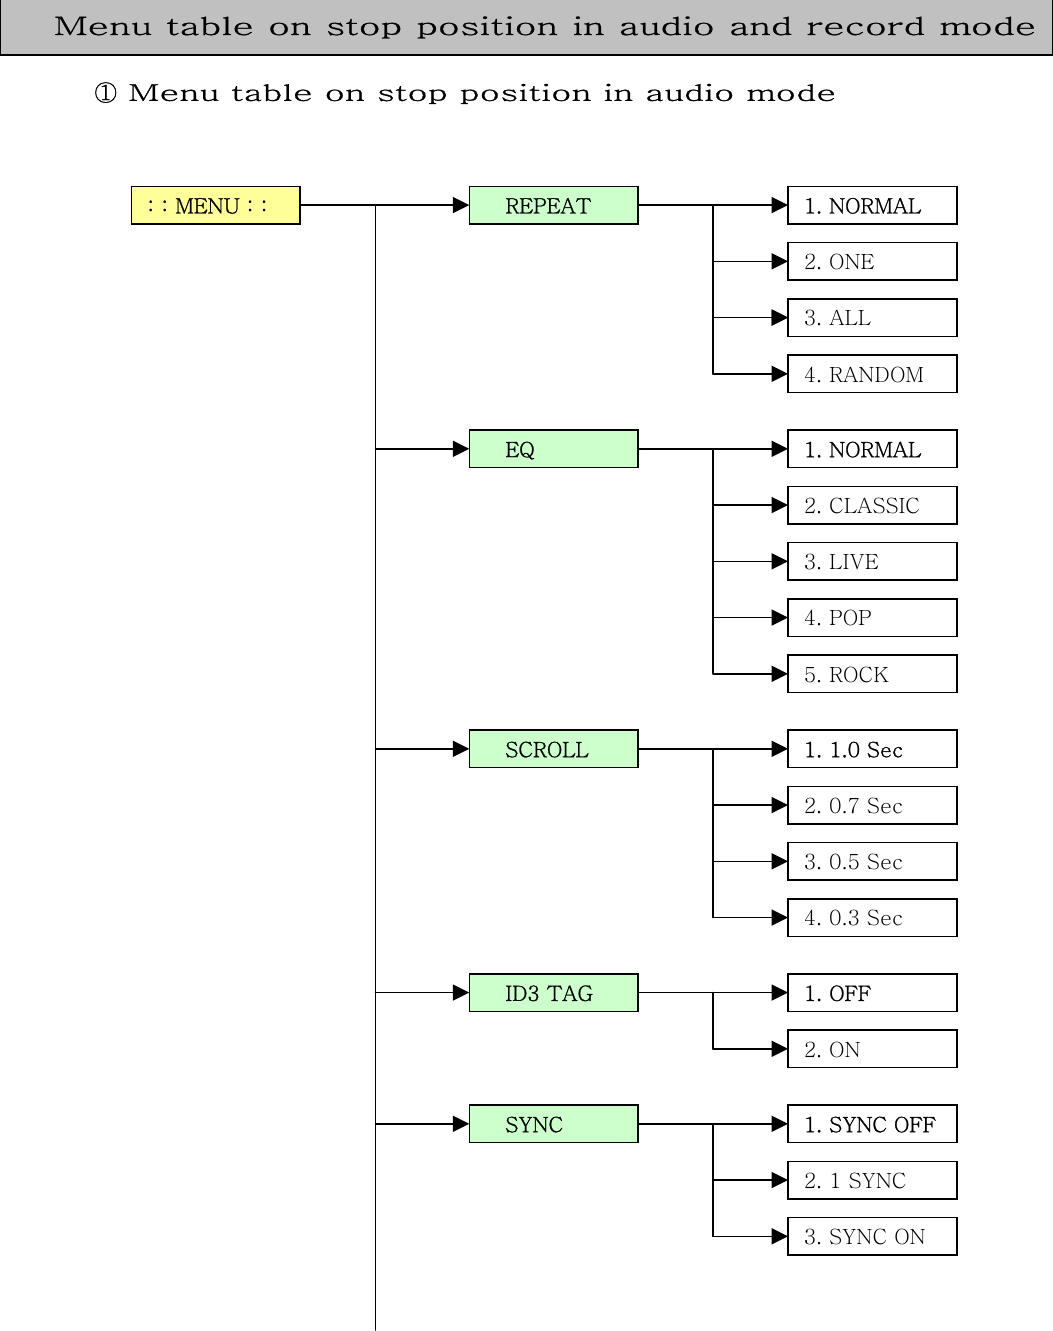     ① Menu table on stop position in audio mode                                Menu table on stop position in audio and record modeREPEAT  1. NORMAL : : MENU : : 2. ONE 3. ALL 4. RANDOM EQ  1. NORMAL 2. CLASSIC 3. LIVE 4. POP 5. ROCK SCROLL  1. 1.0 Sec 2. 0.7 Sec 3. 0.5 Sec 4. 0.3 Sec ID3 TAG  1. OFF 2. ON SYNC  1. SYNC OFF 2. 1 SYNC 3. SYNC ON 